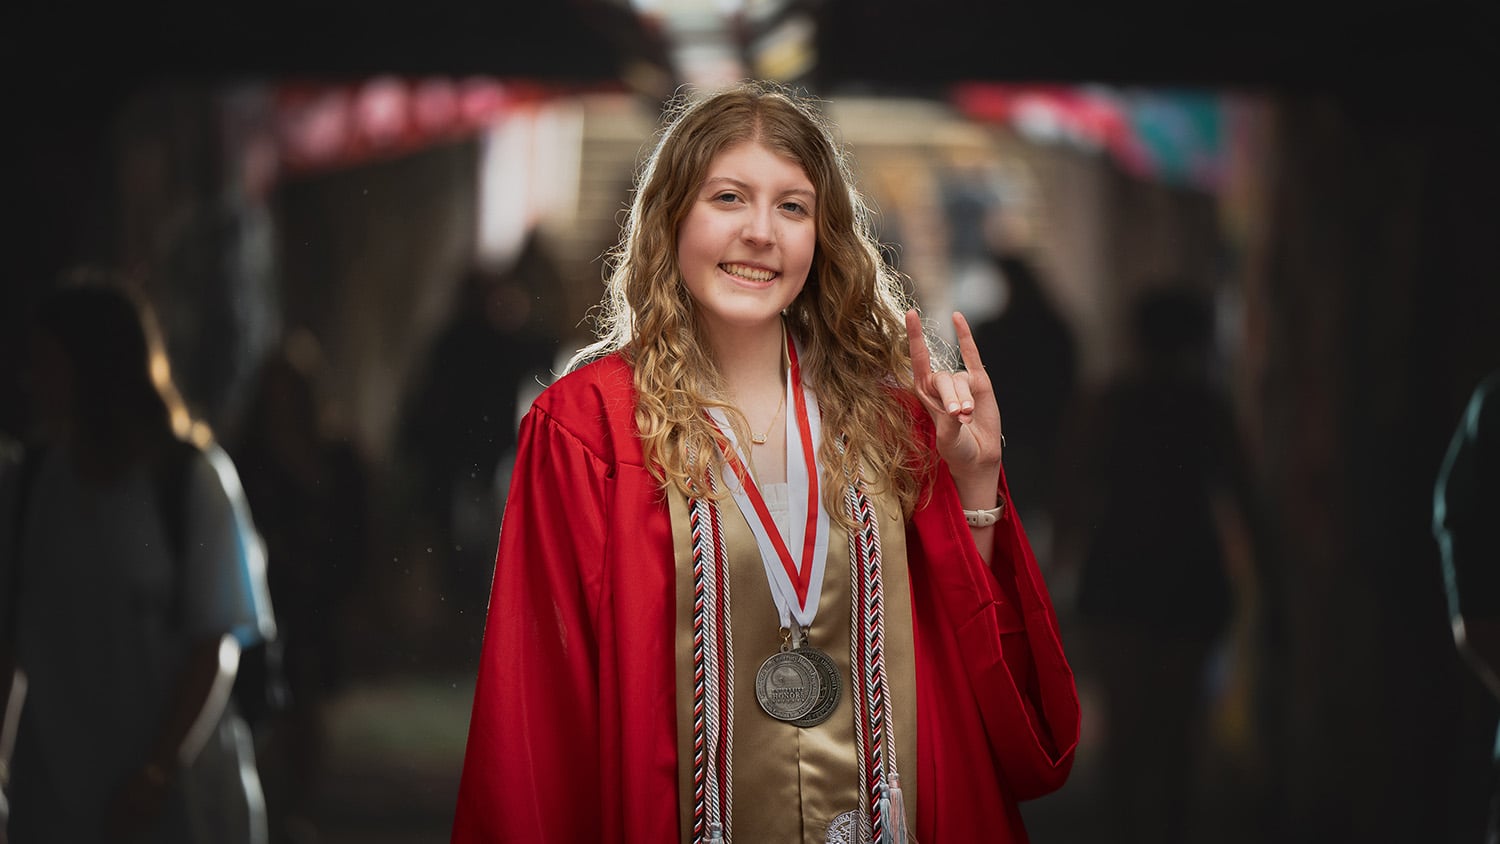 Amanda Baright, a statistics student graduating this spring.